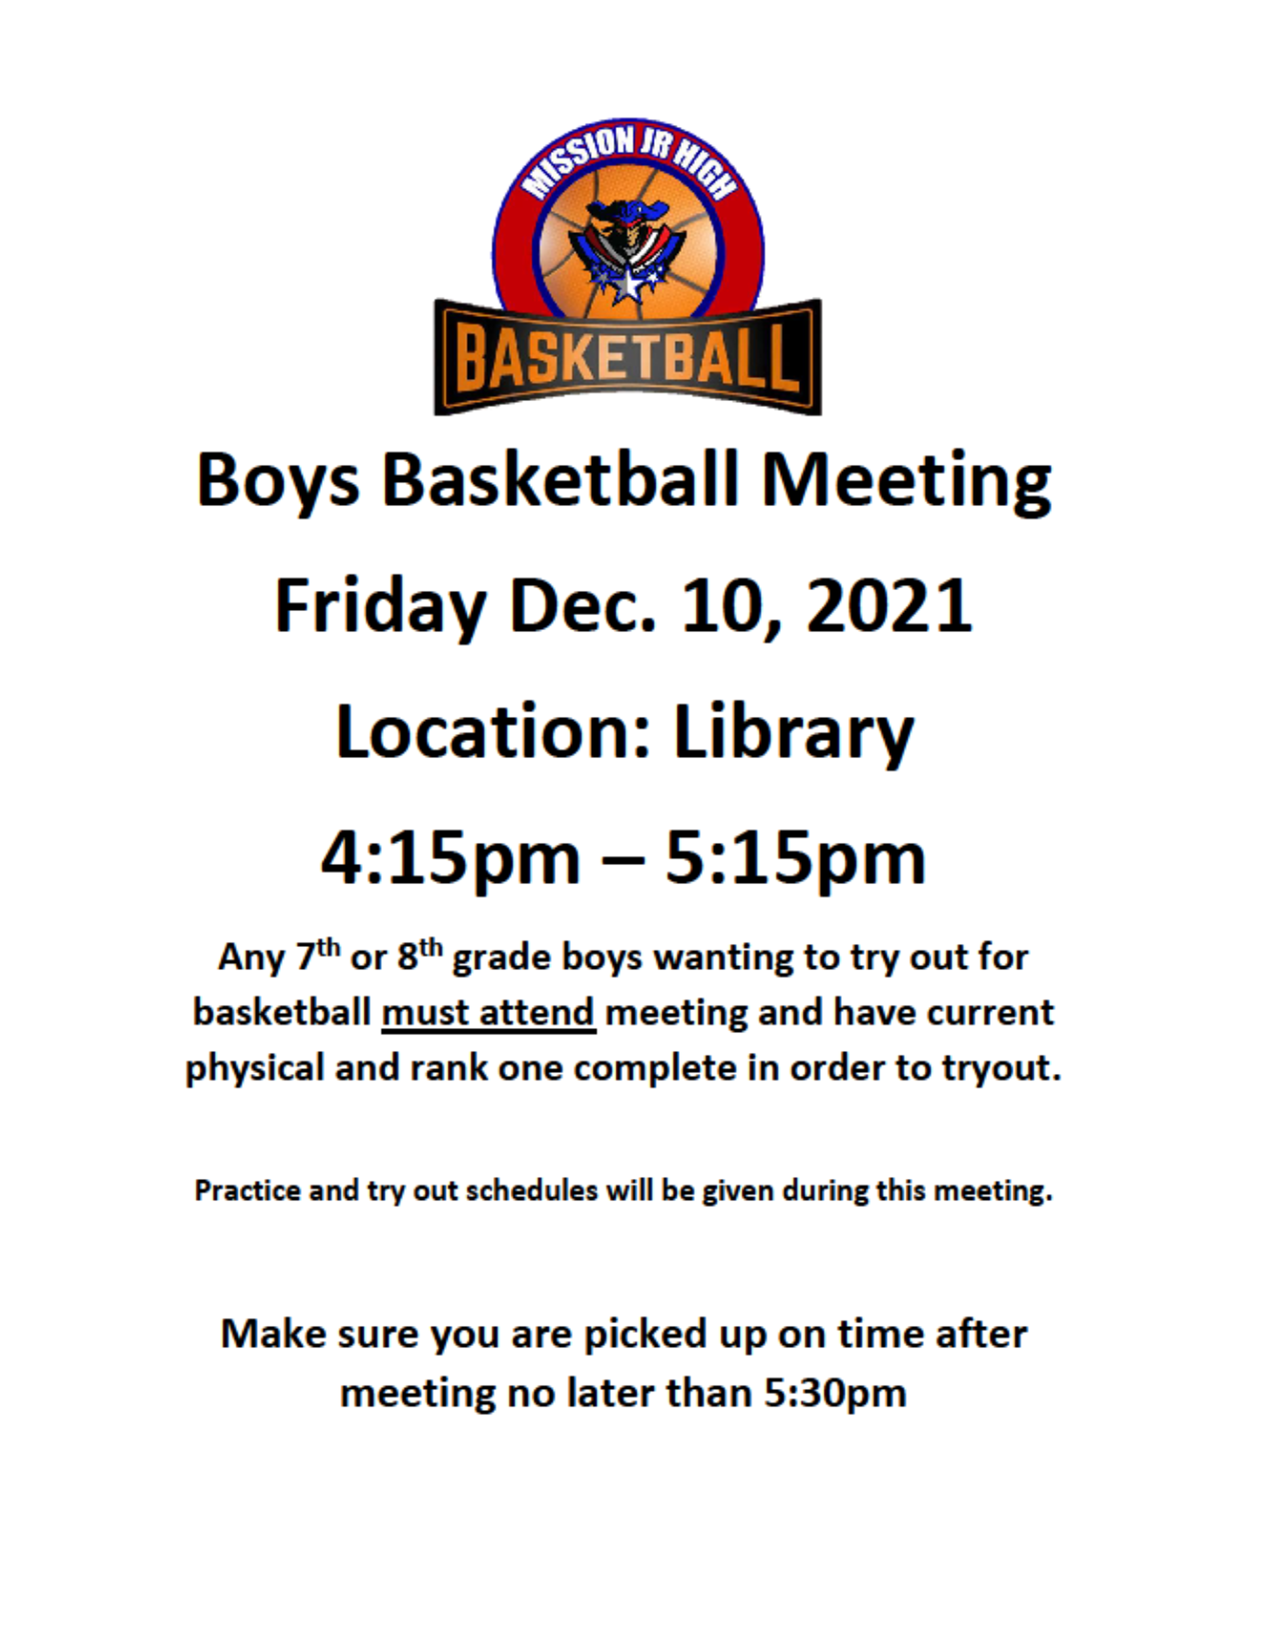 Boys basketball tryout flyer